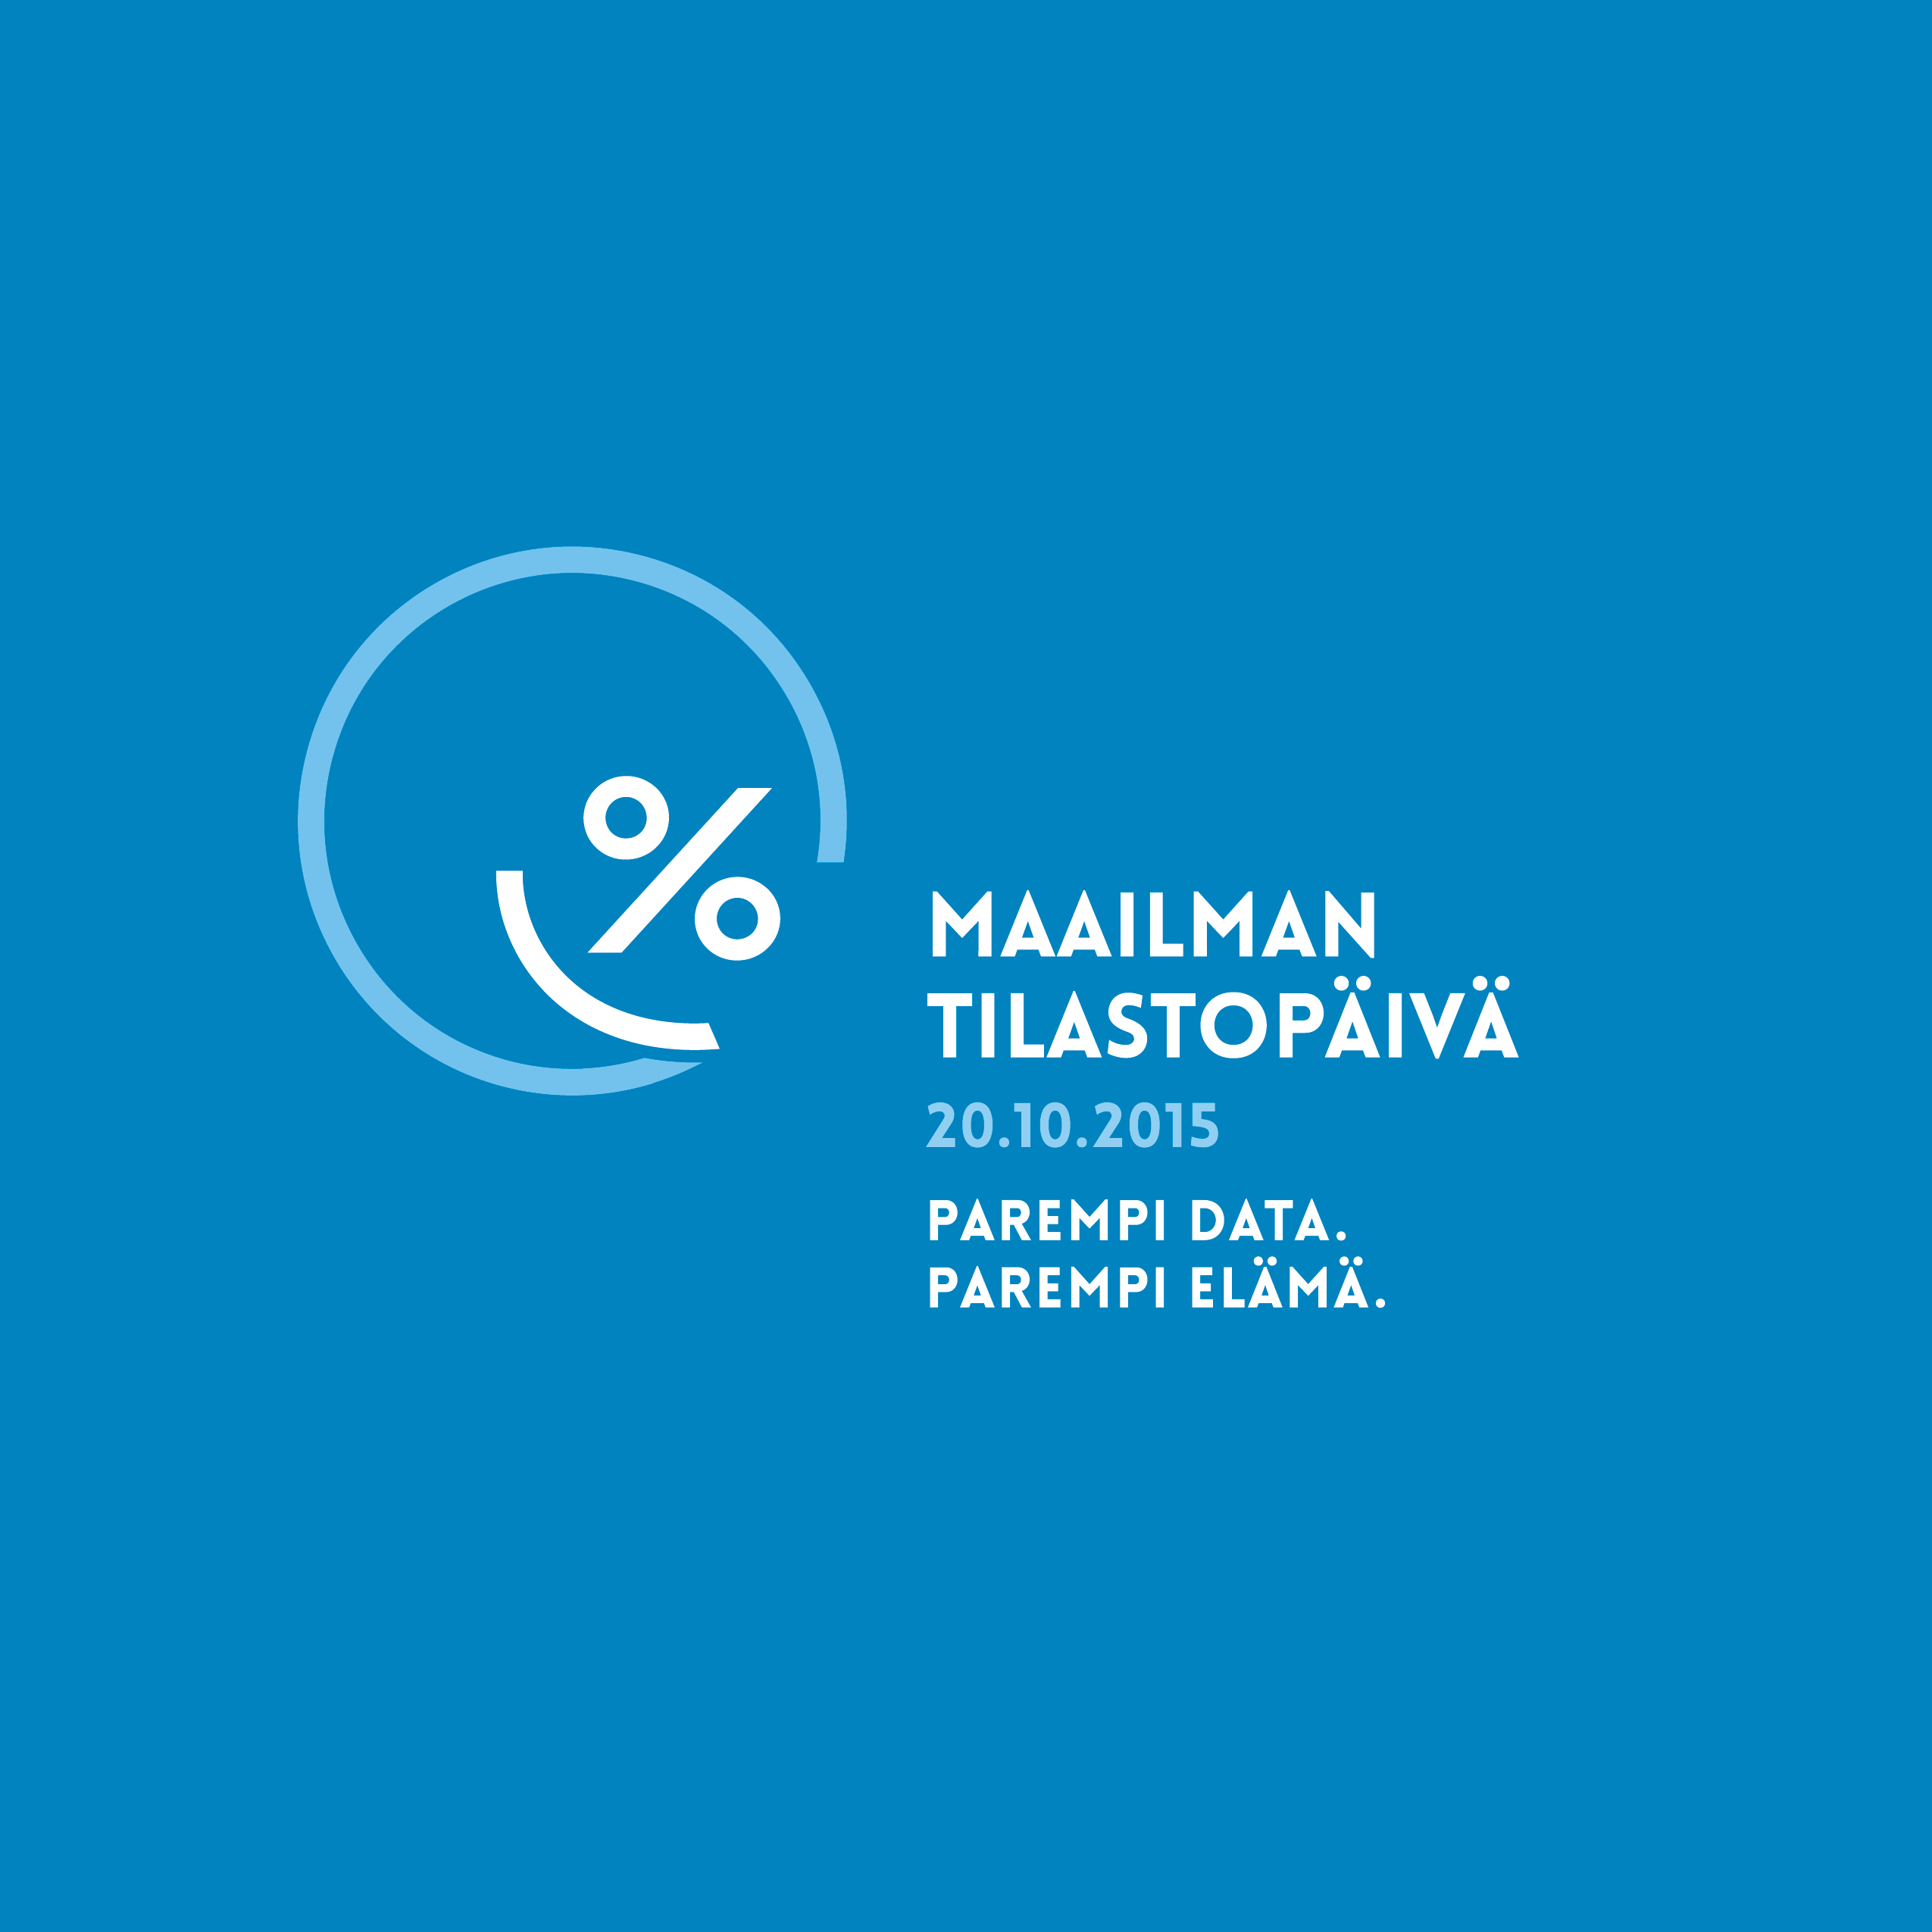 World Statistics Day Logo in Finnish